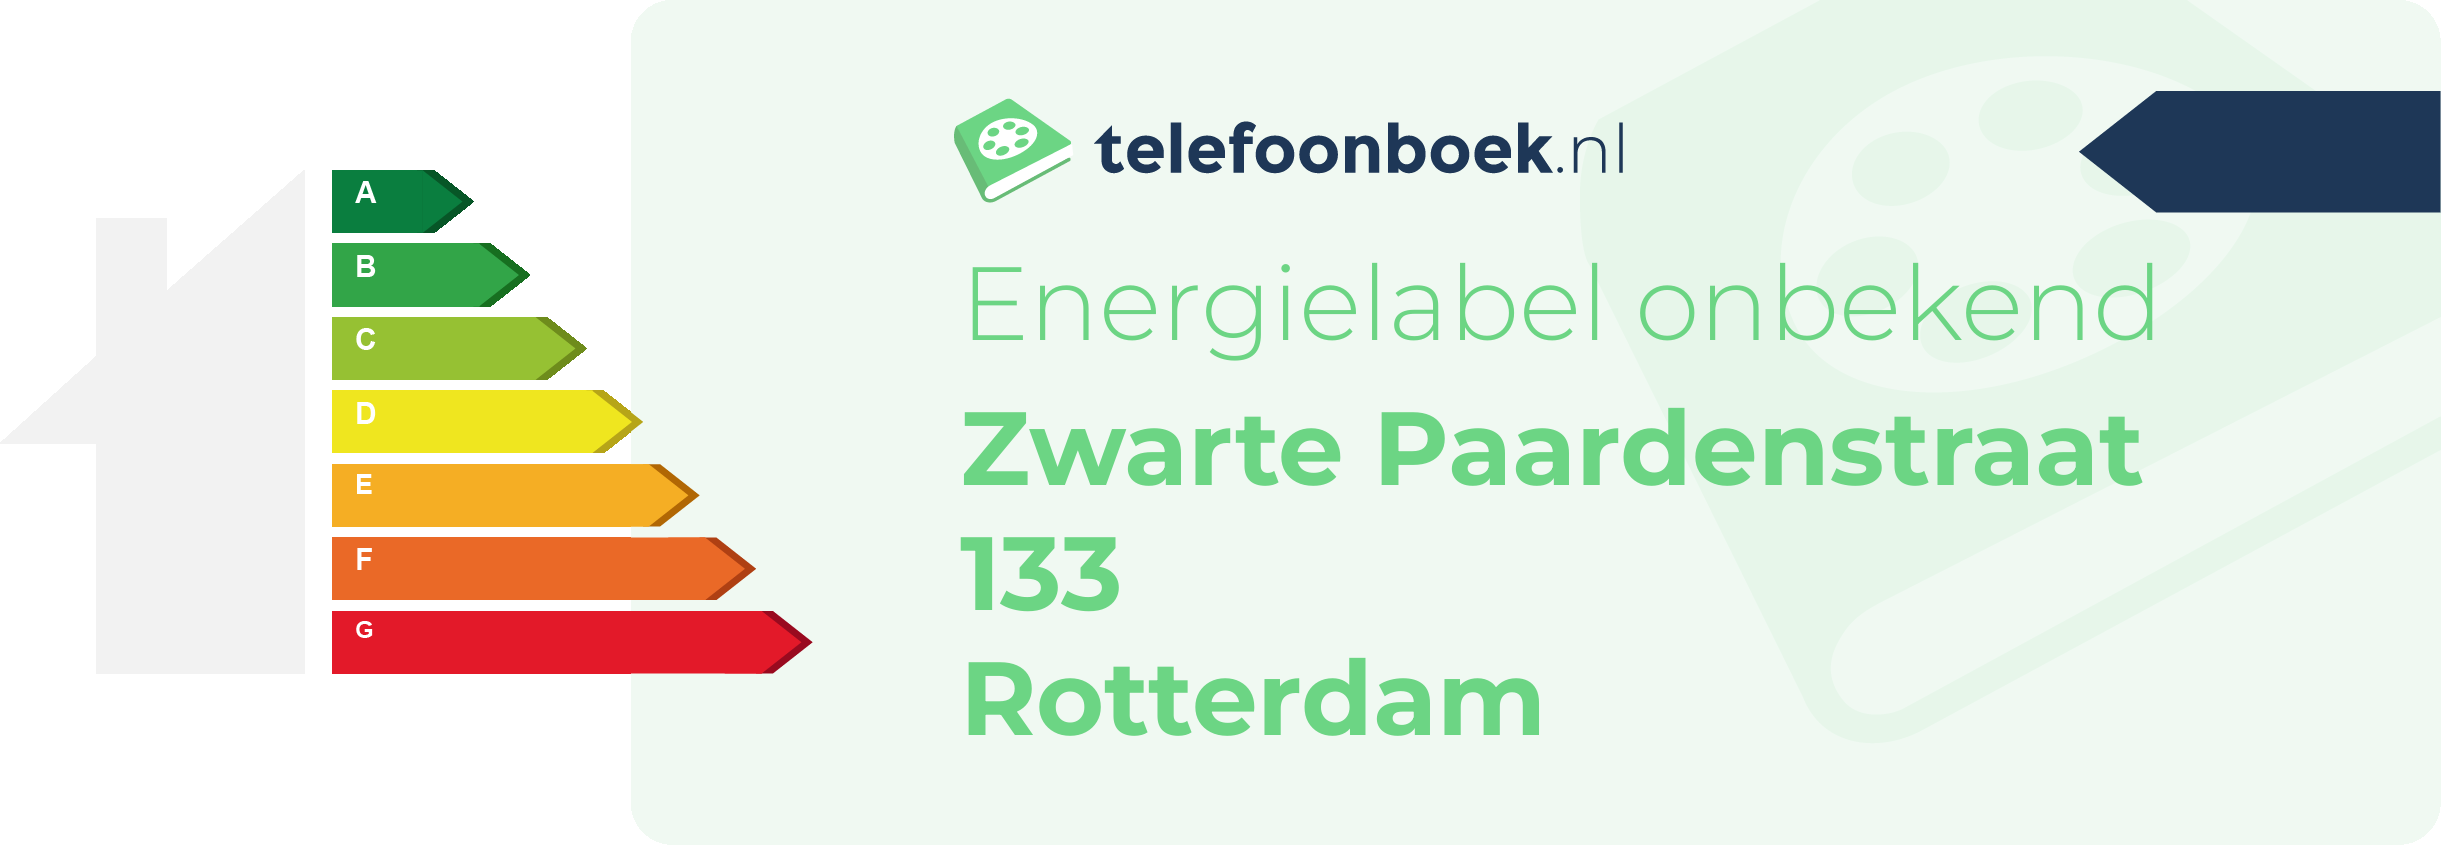 Energielabel Zwarte Paardenstraat 133 Rotterdam